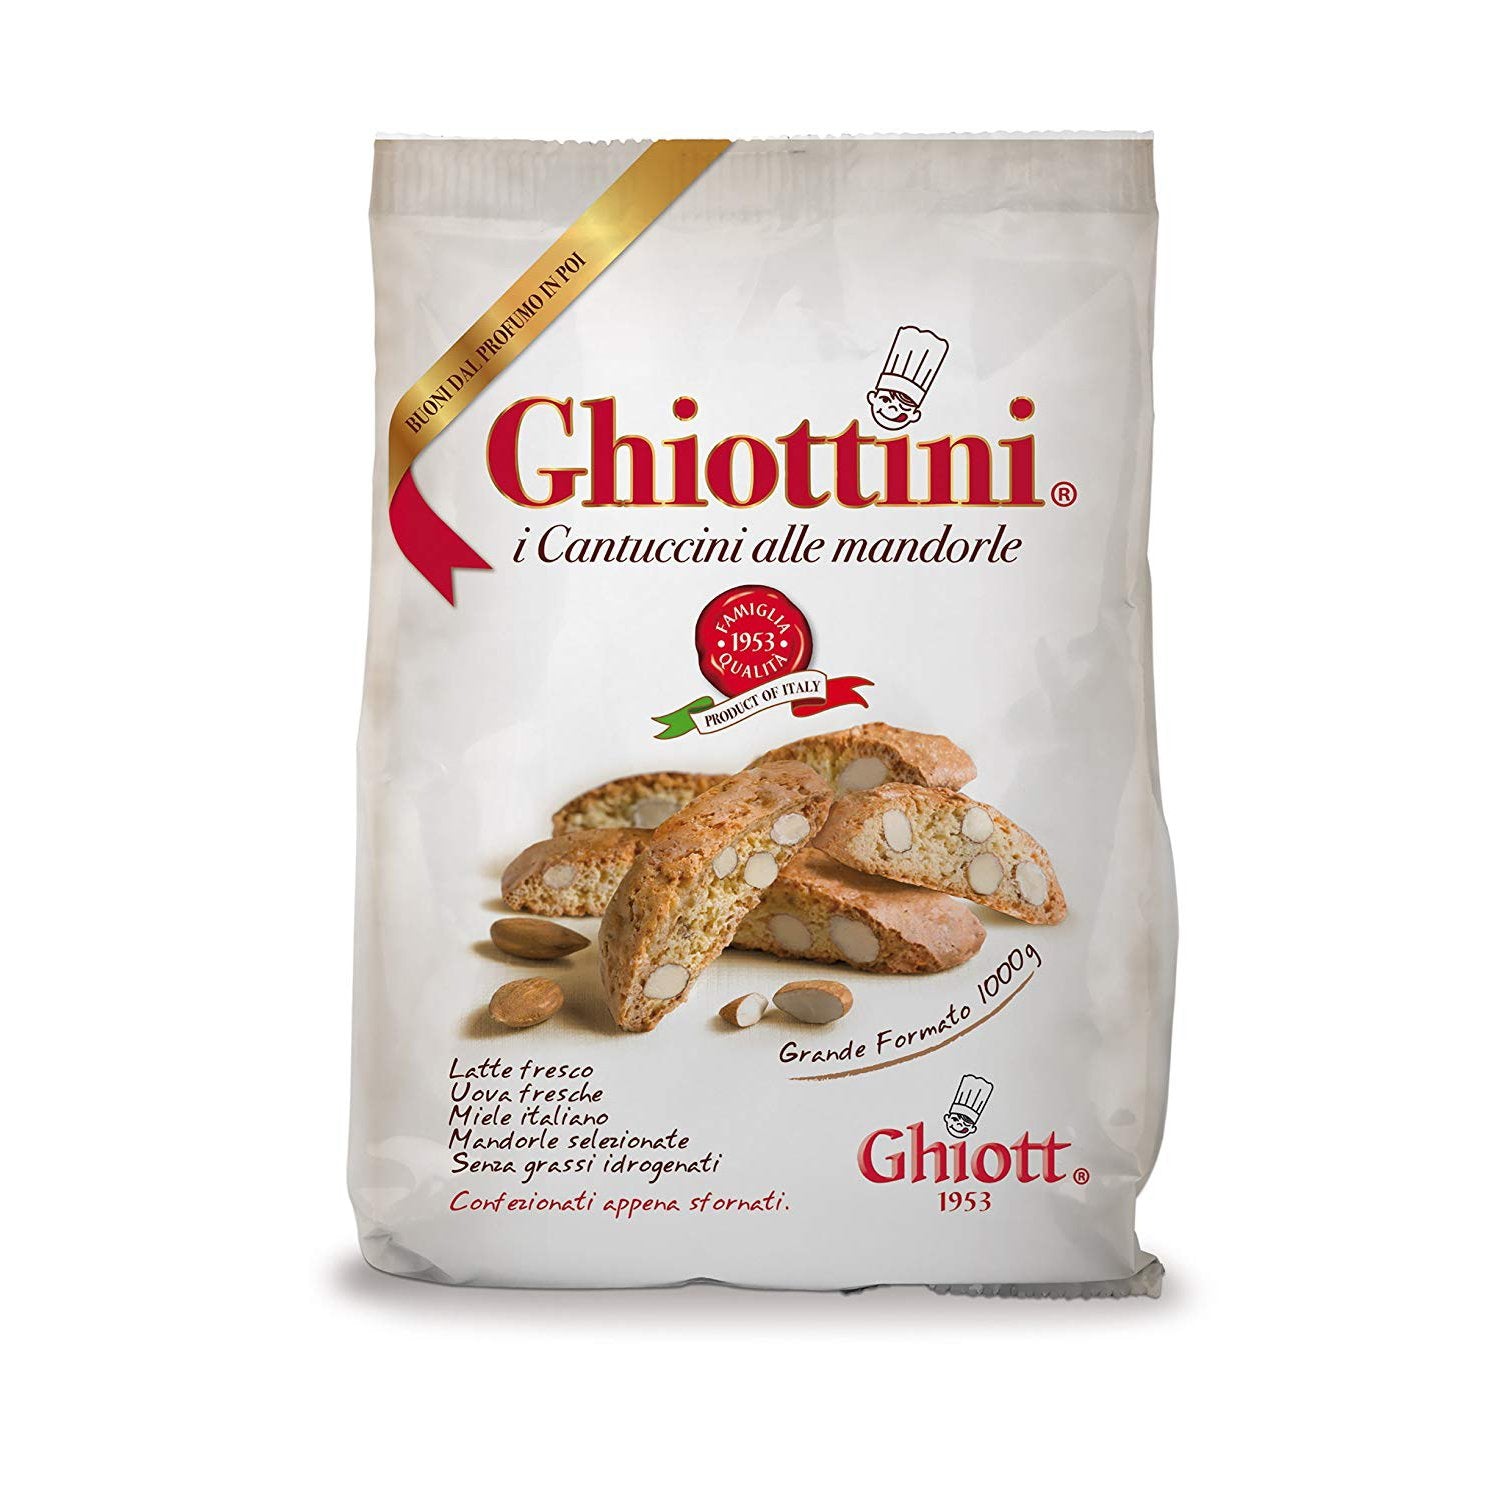 Ghiott Ghiottini Almond Biscotti Cookies, 1kg - 35oz bag